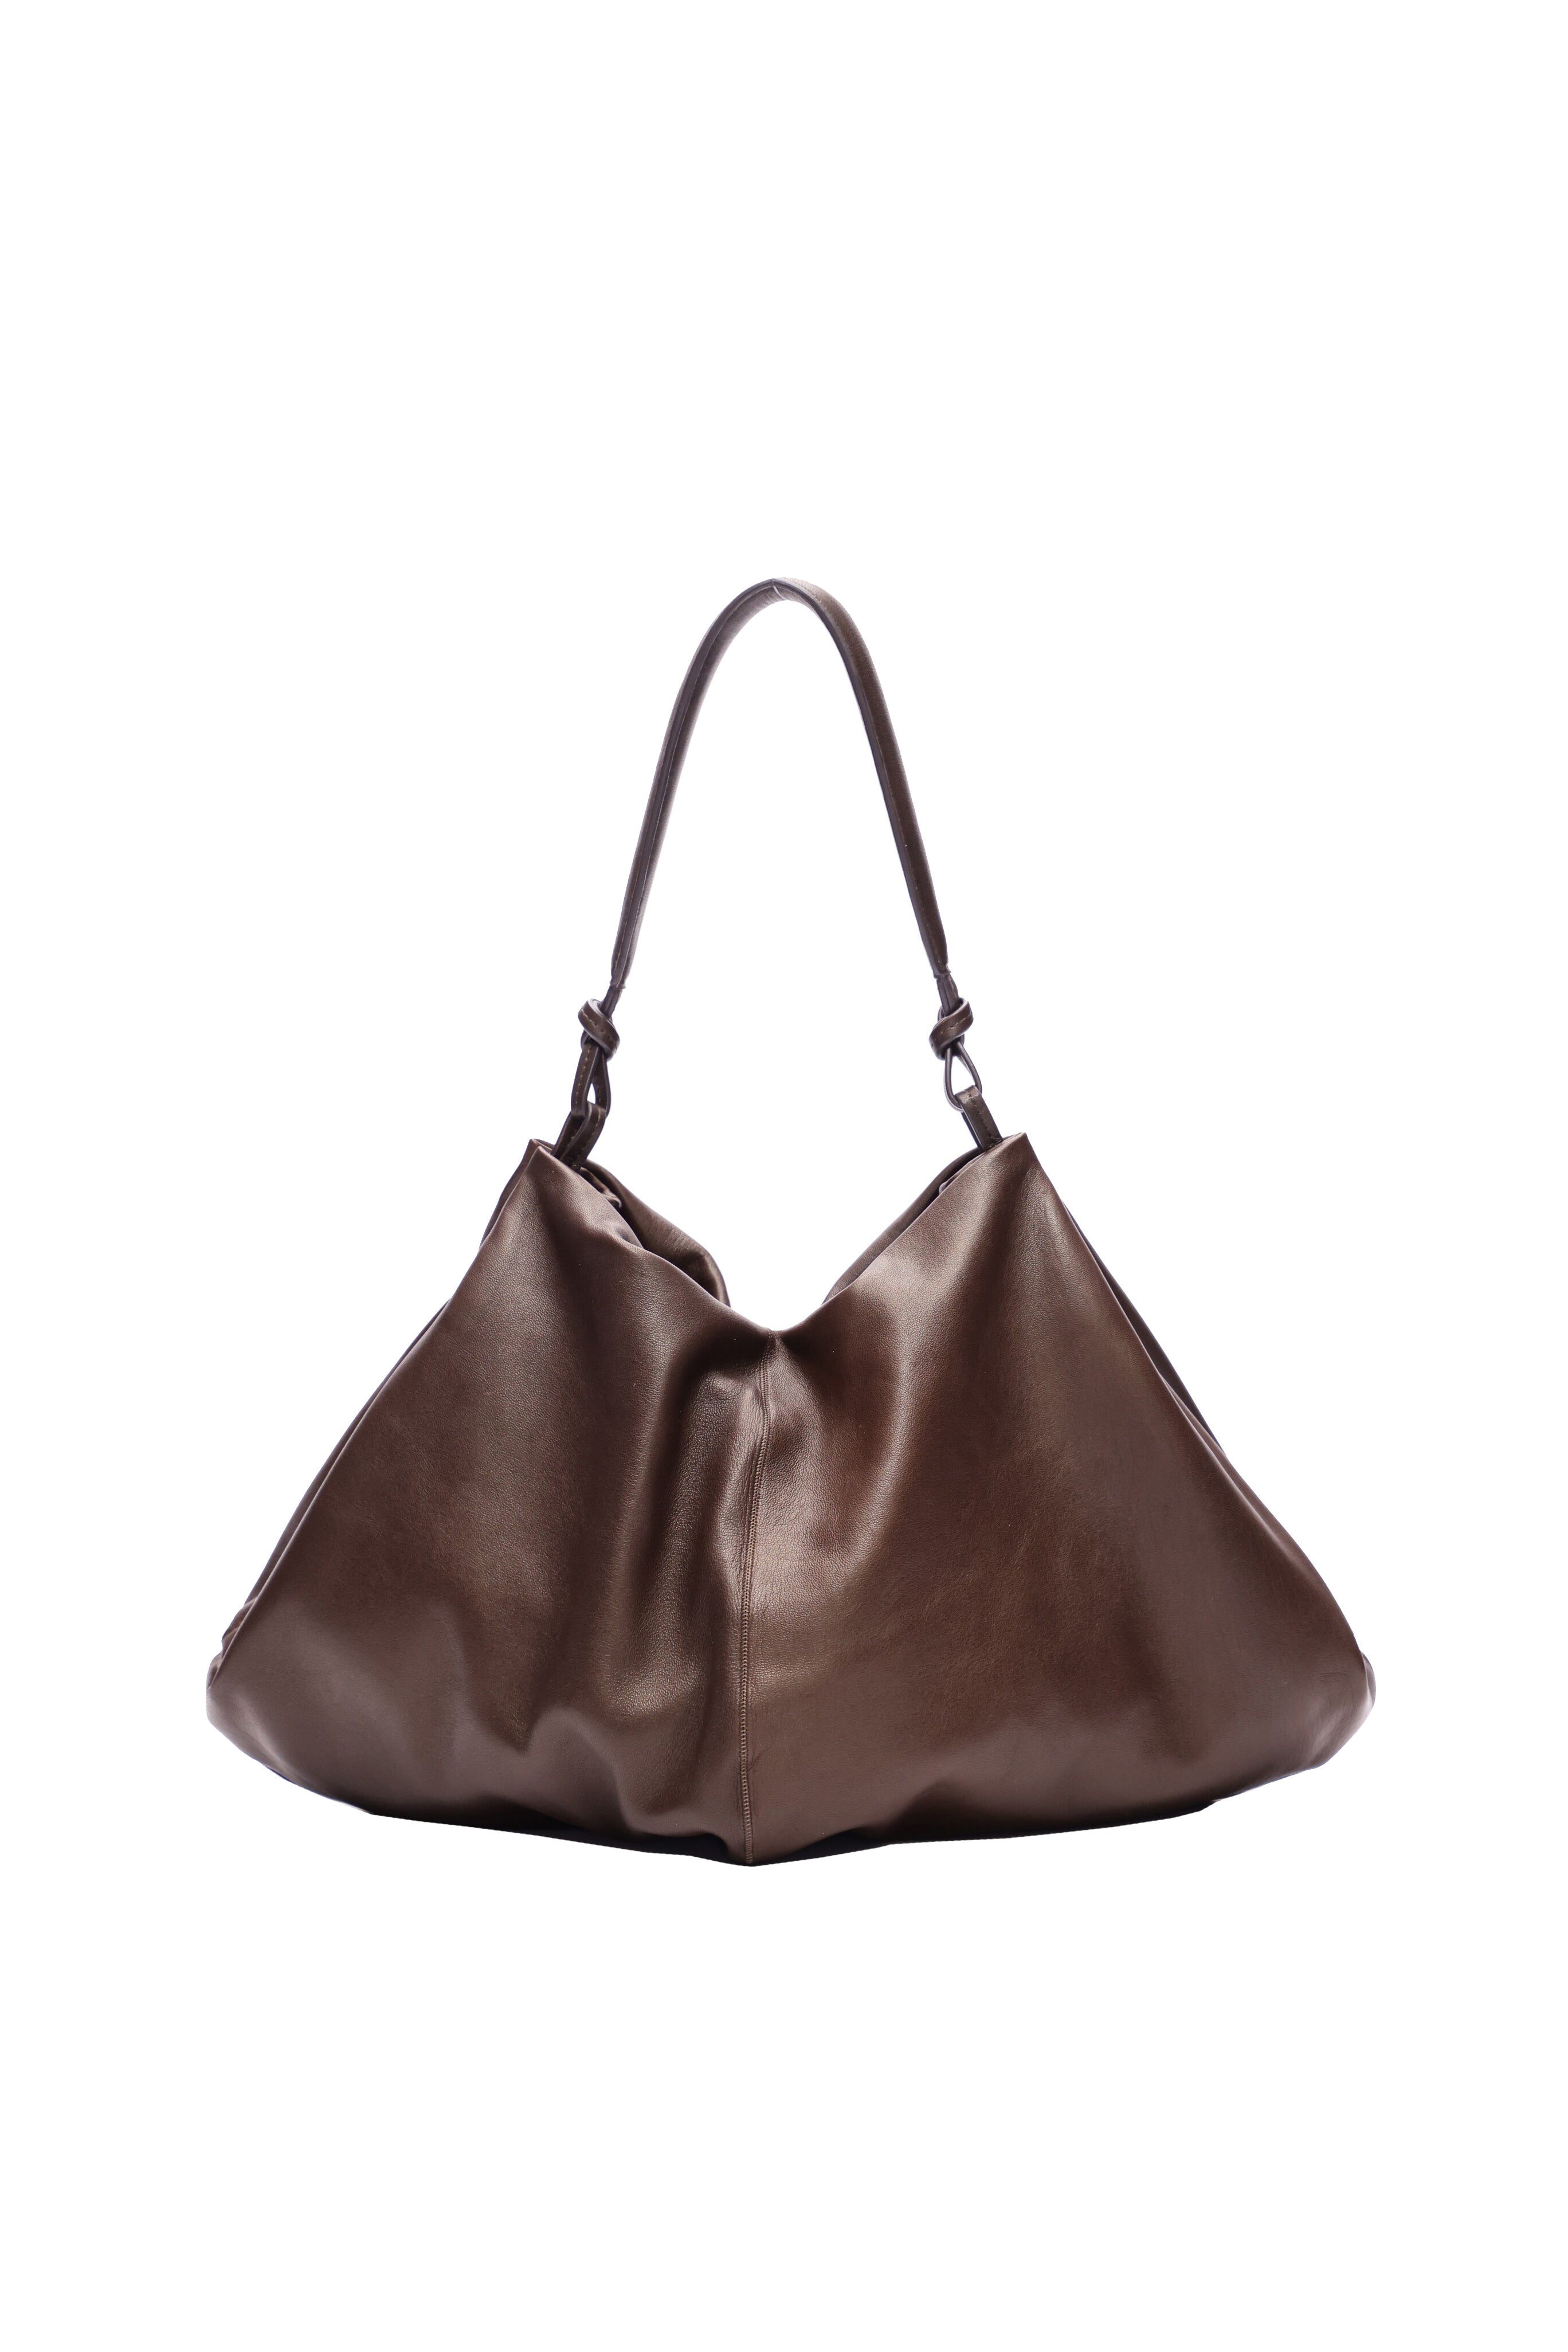 THE ROW Samia Leather Bag